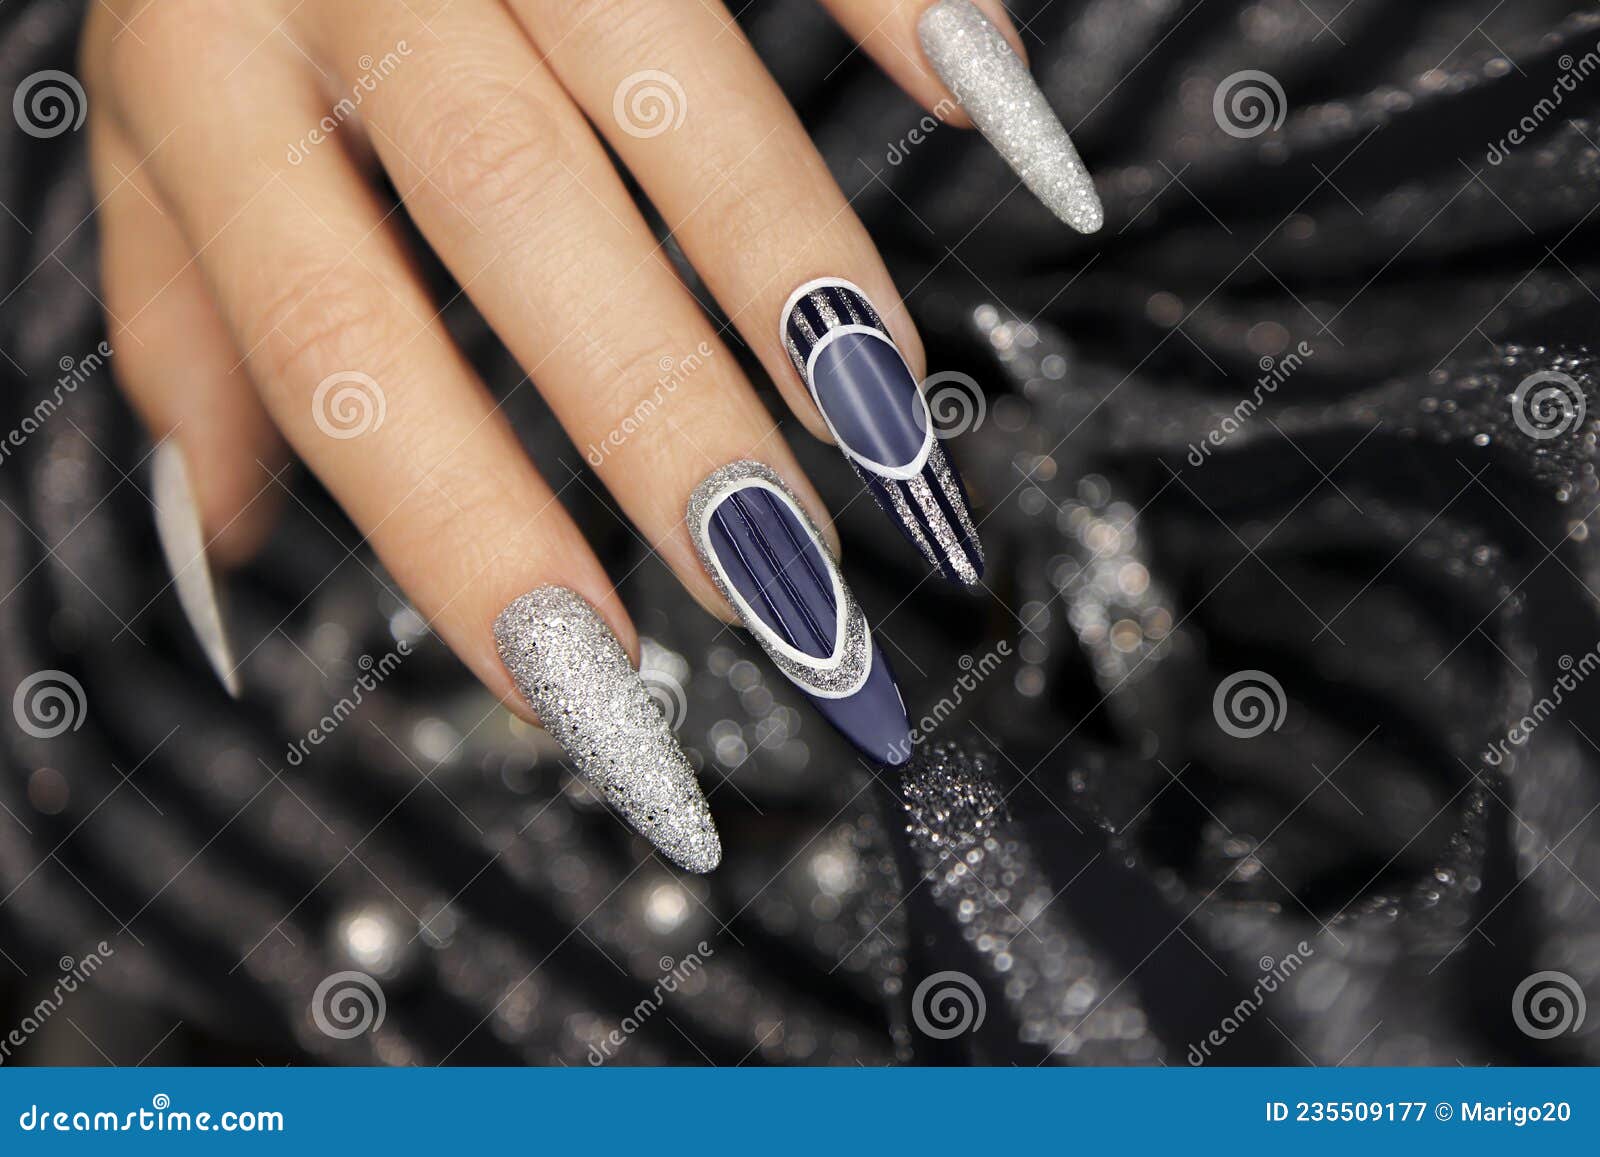 coffin nail designs — Deep Blue Silver Diamond Summer Night Nails